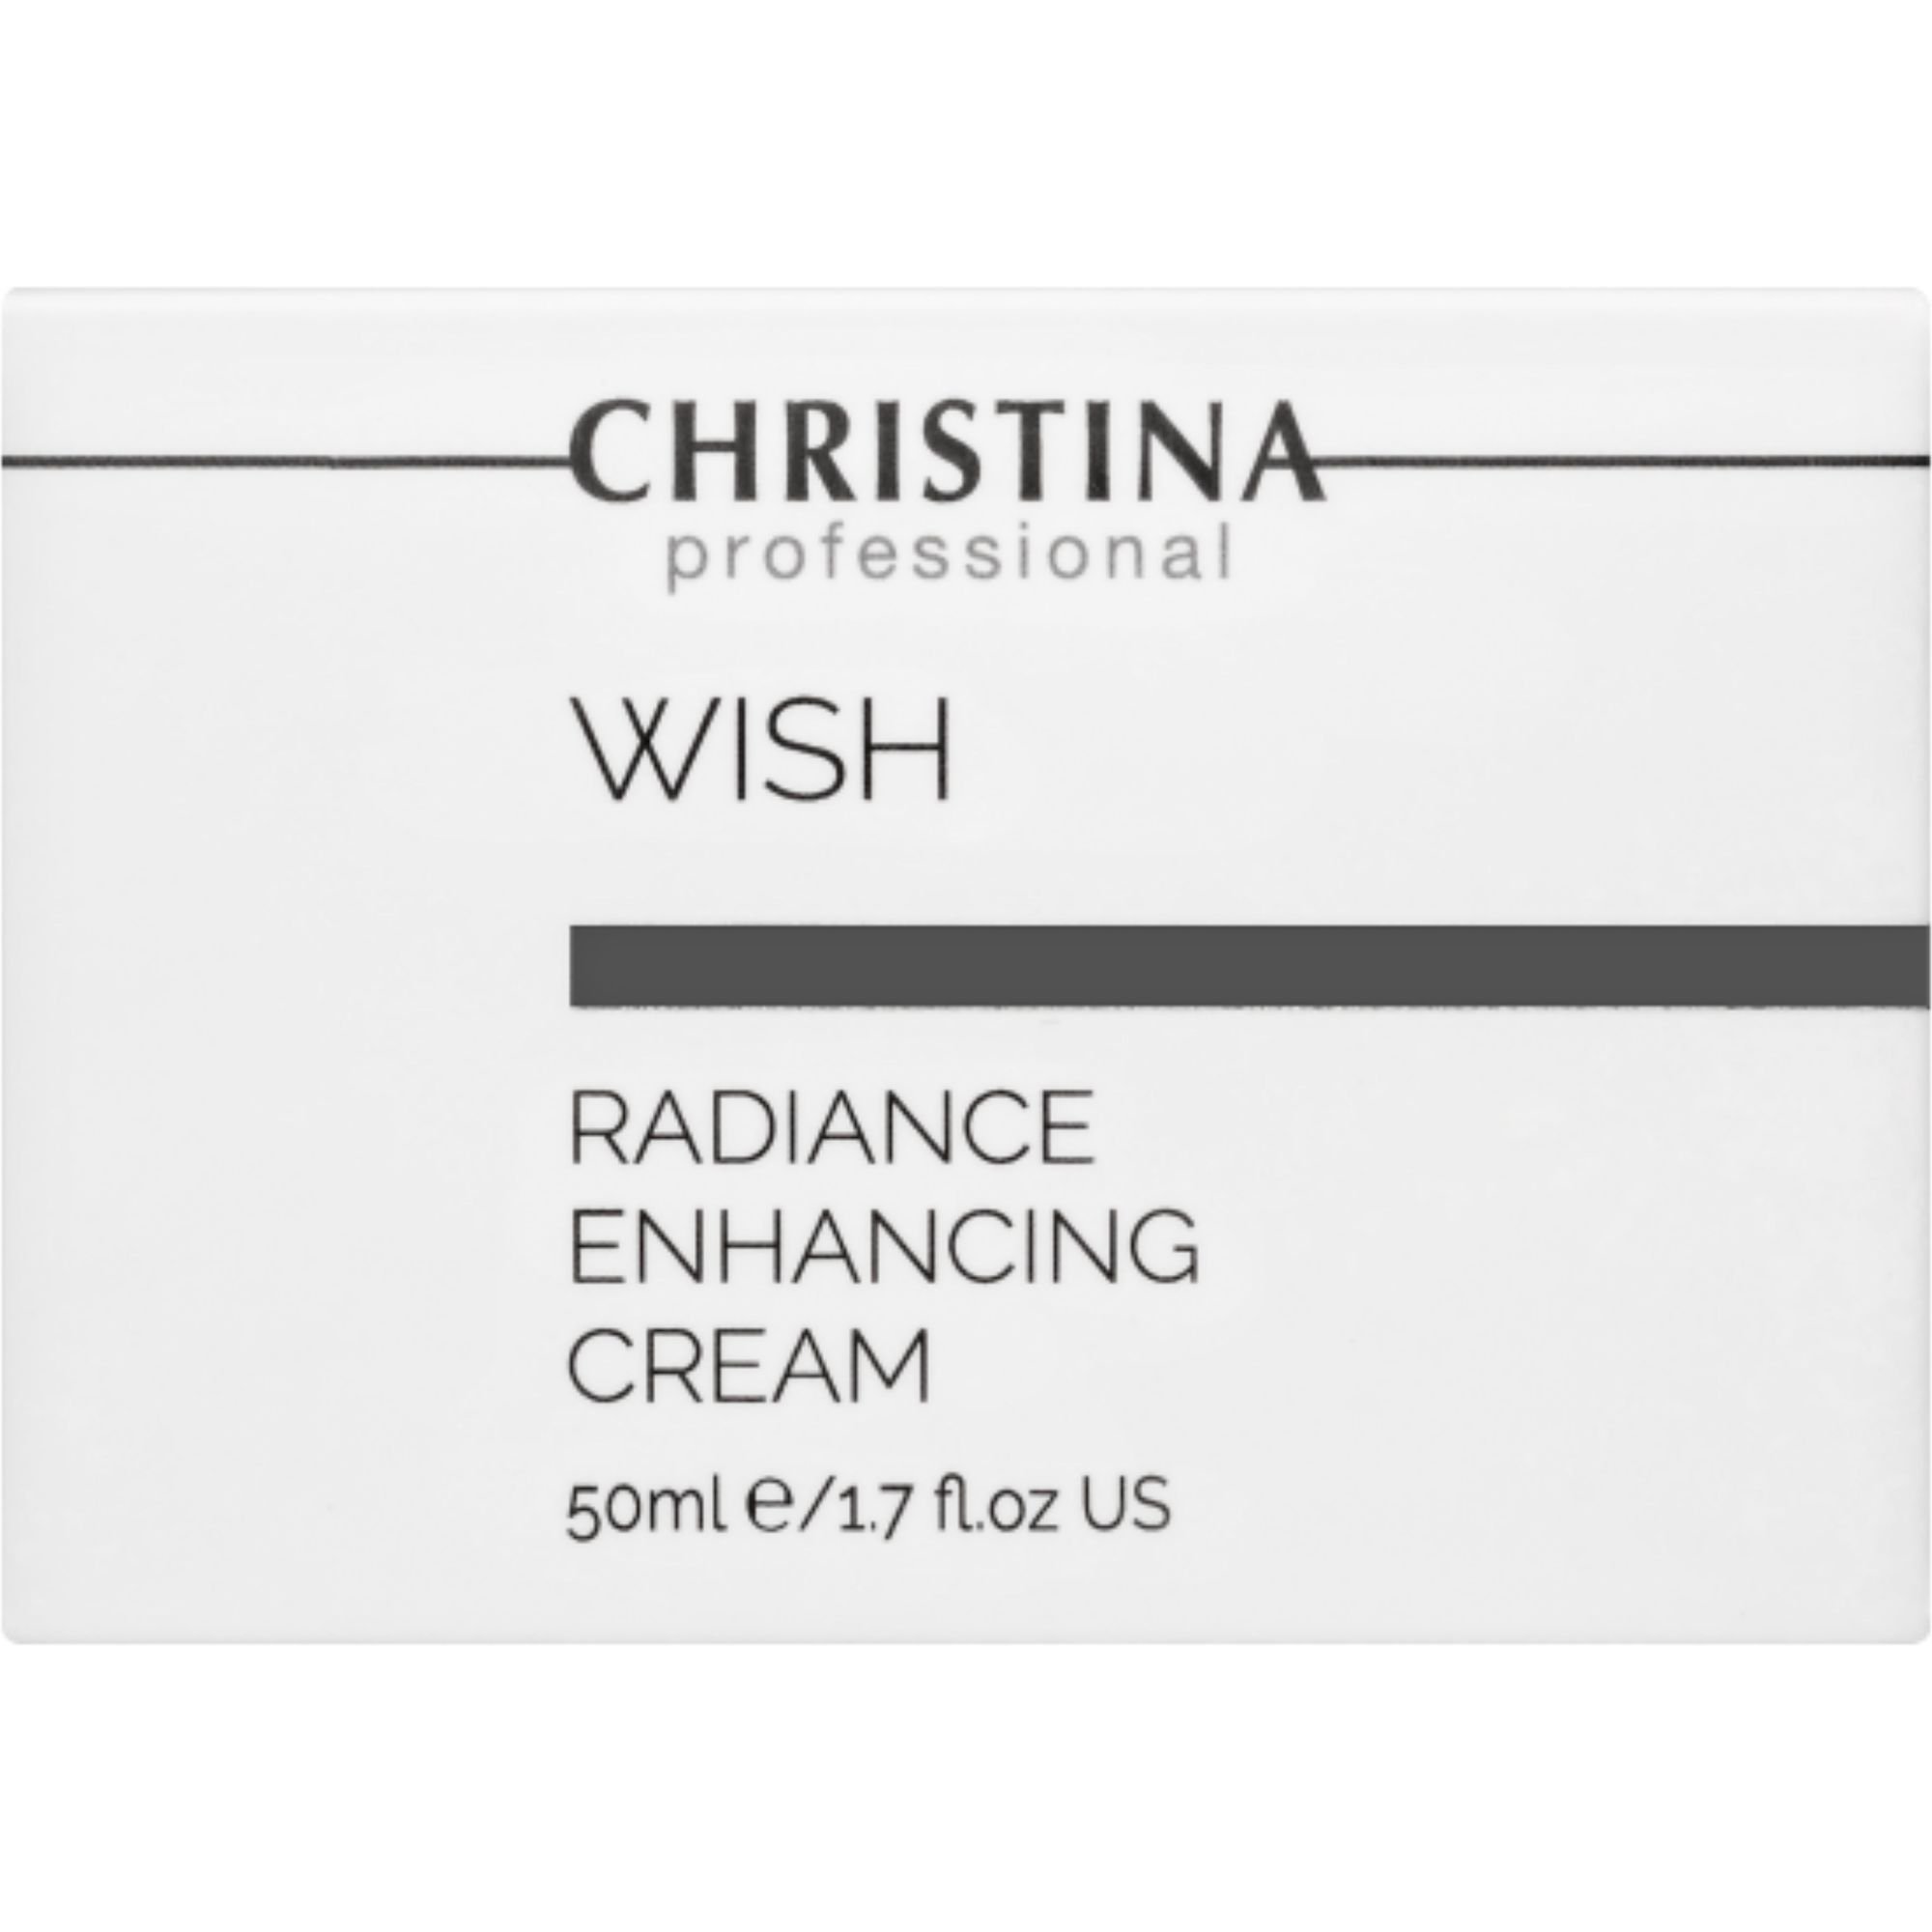 Омолоджувальний крем Christina Wish Radiance Enhancing Cream 50 мл - фото 2